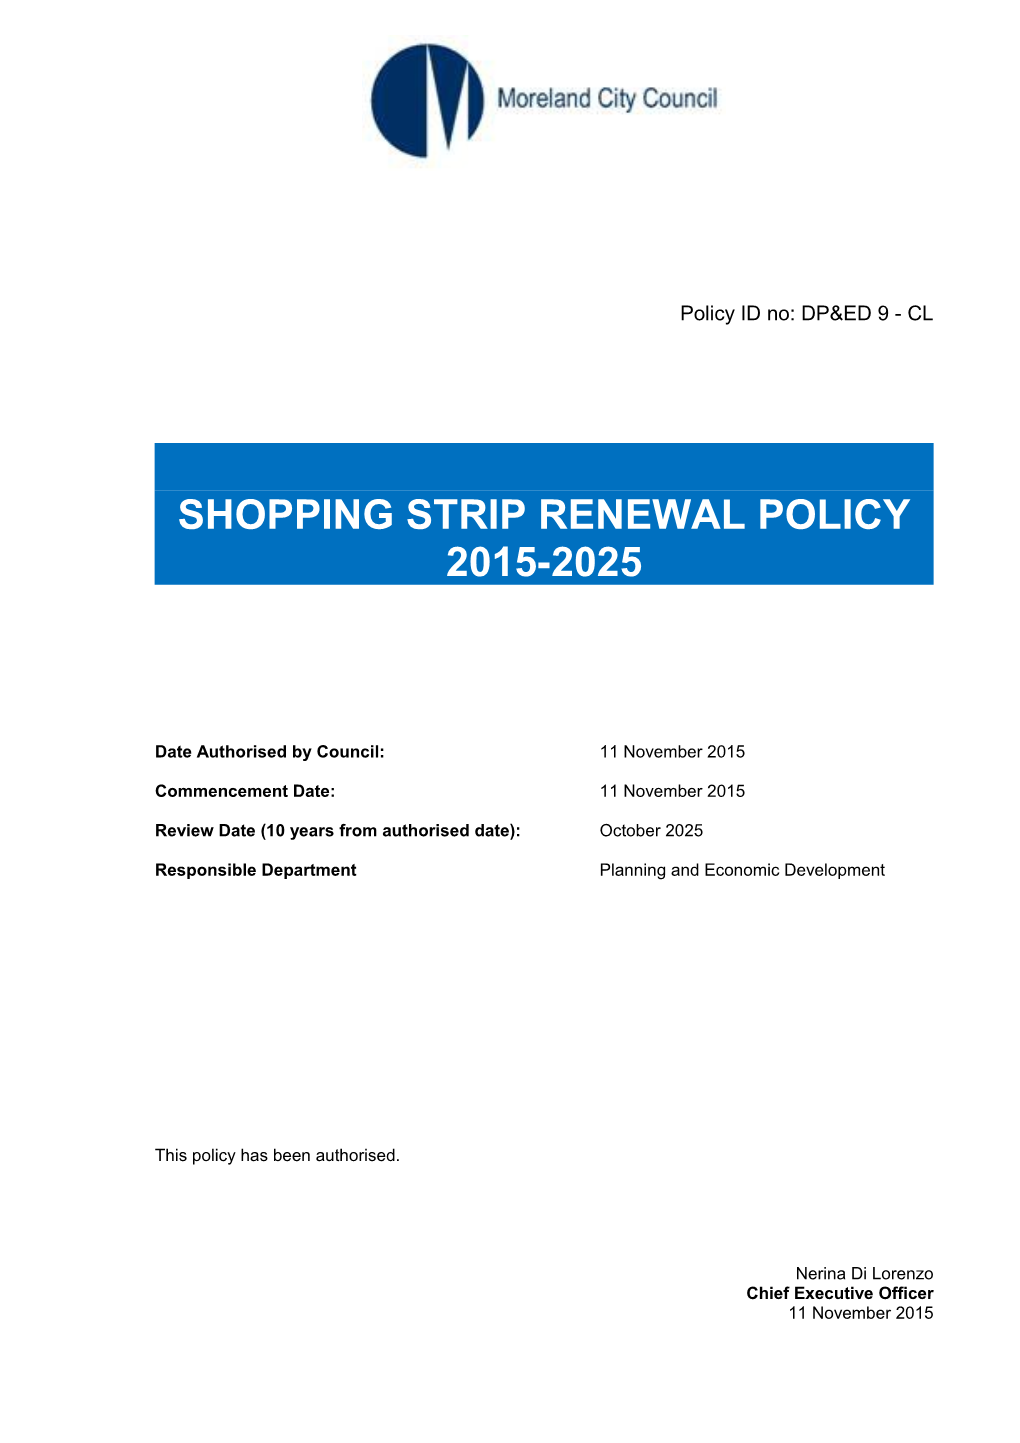 Shopping Strip Renewal Policy 2015-2025